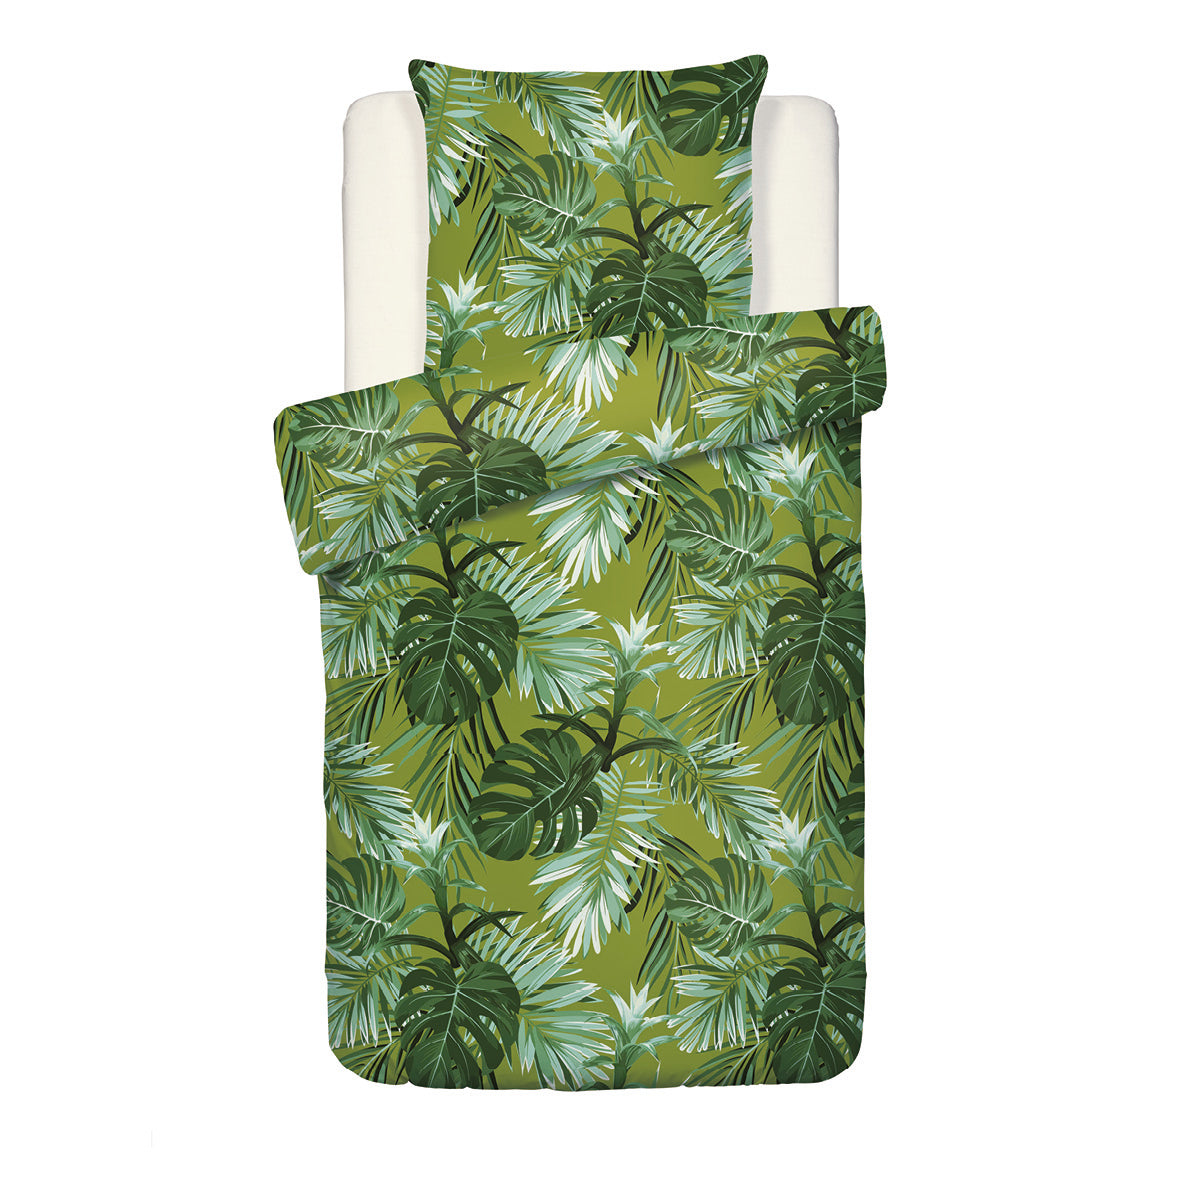 Duvet cover + pillowcase(s) cotton satin - Tropical Light green 140 x 200 cm + 63 x 63 cm